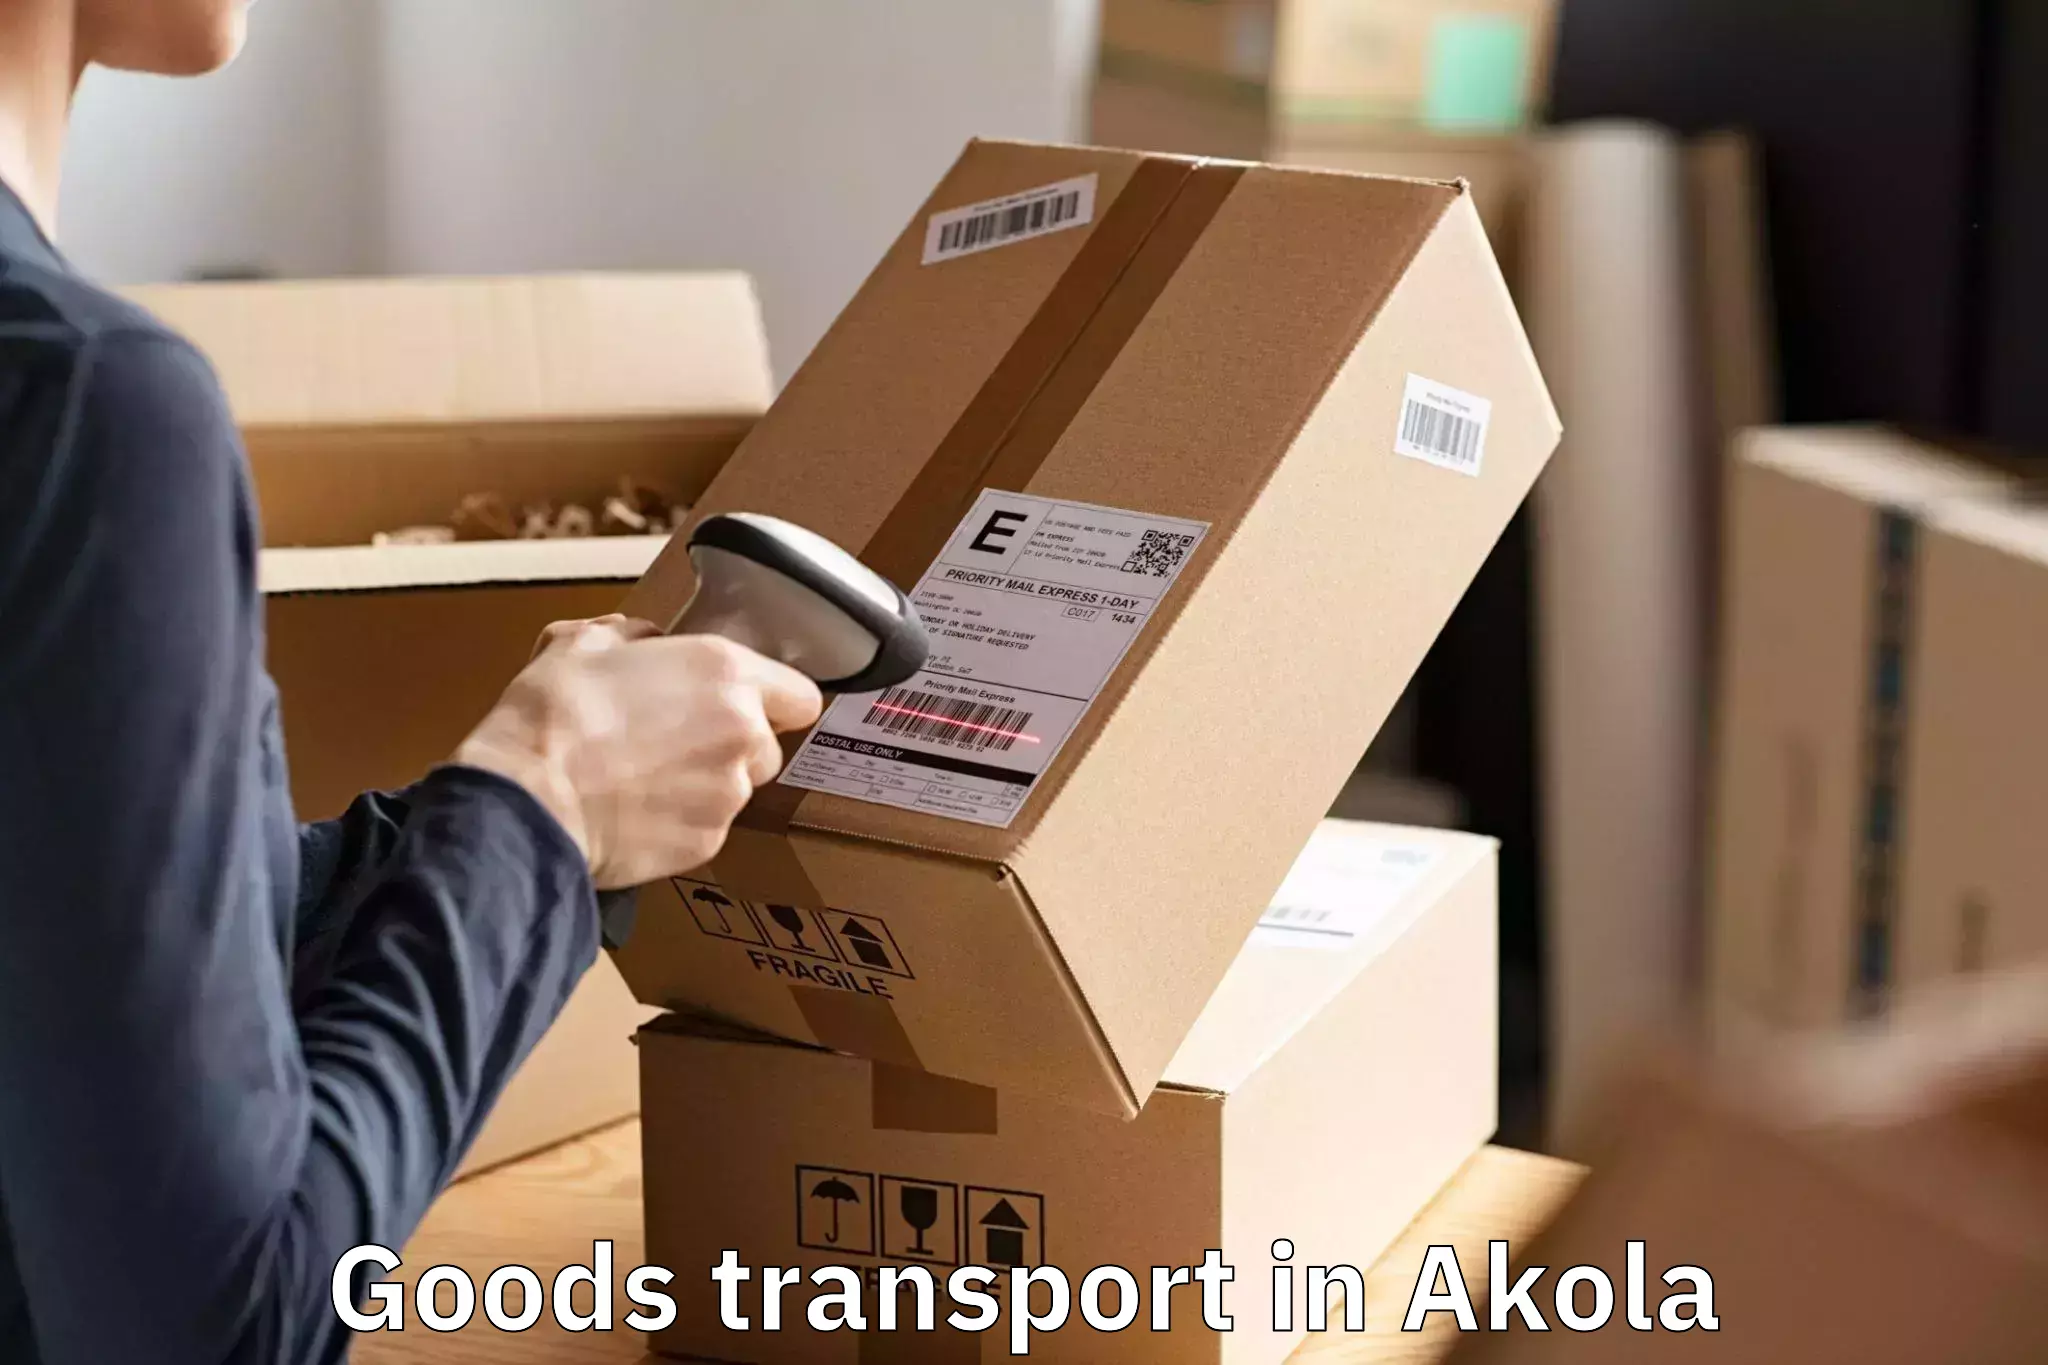 Comprehensive Goods Transport in Akola, Maharashtra (MH)